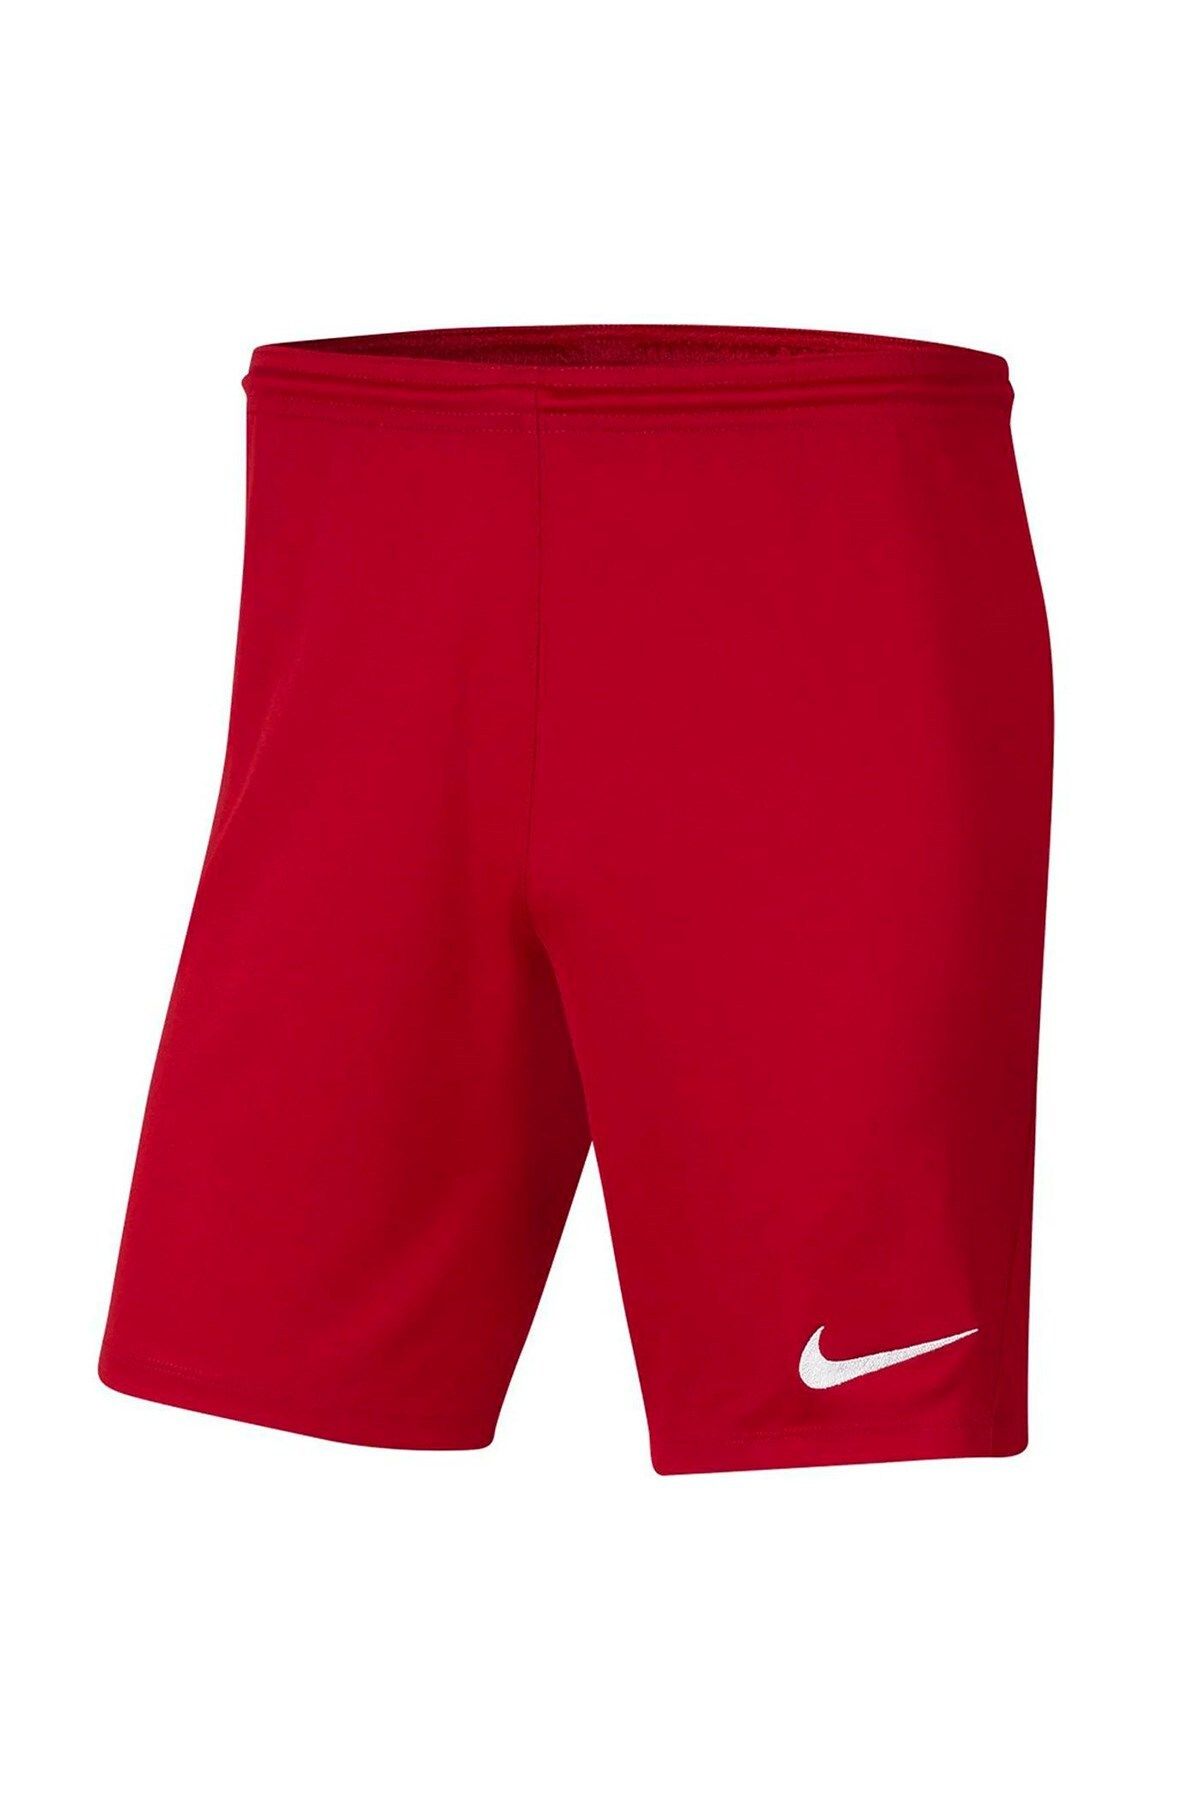 Nike Bv6855-657 Dry Park Iıı Erkek Futbol Şortu